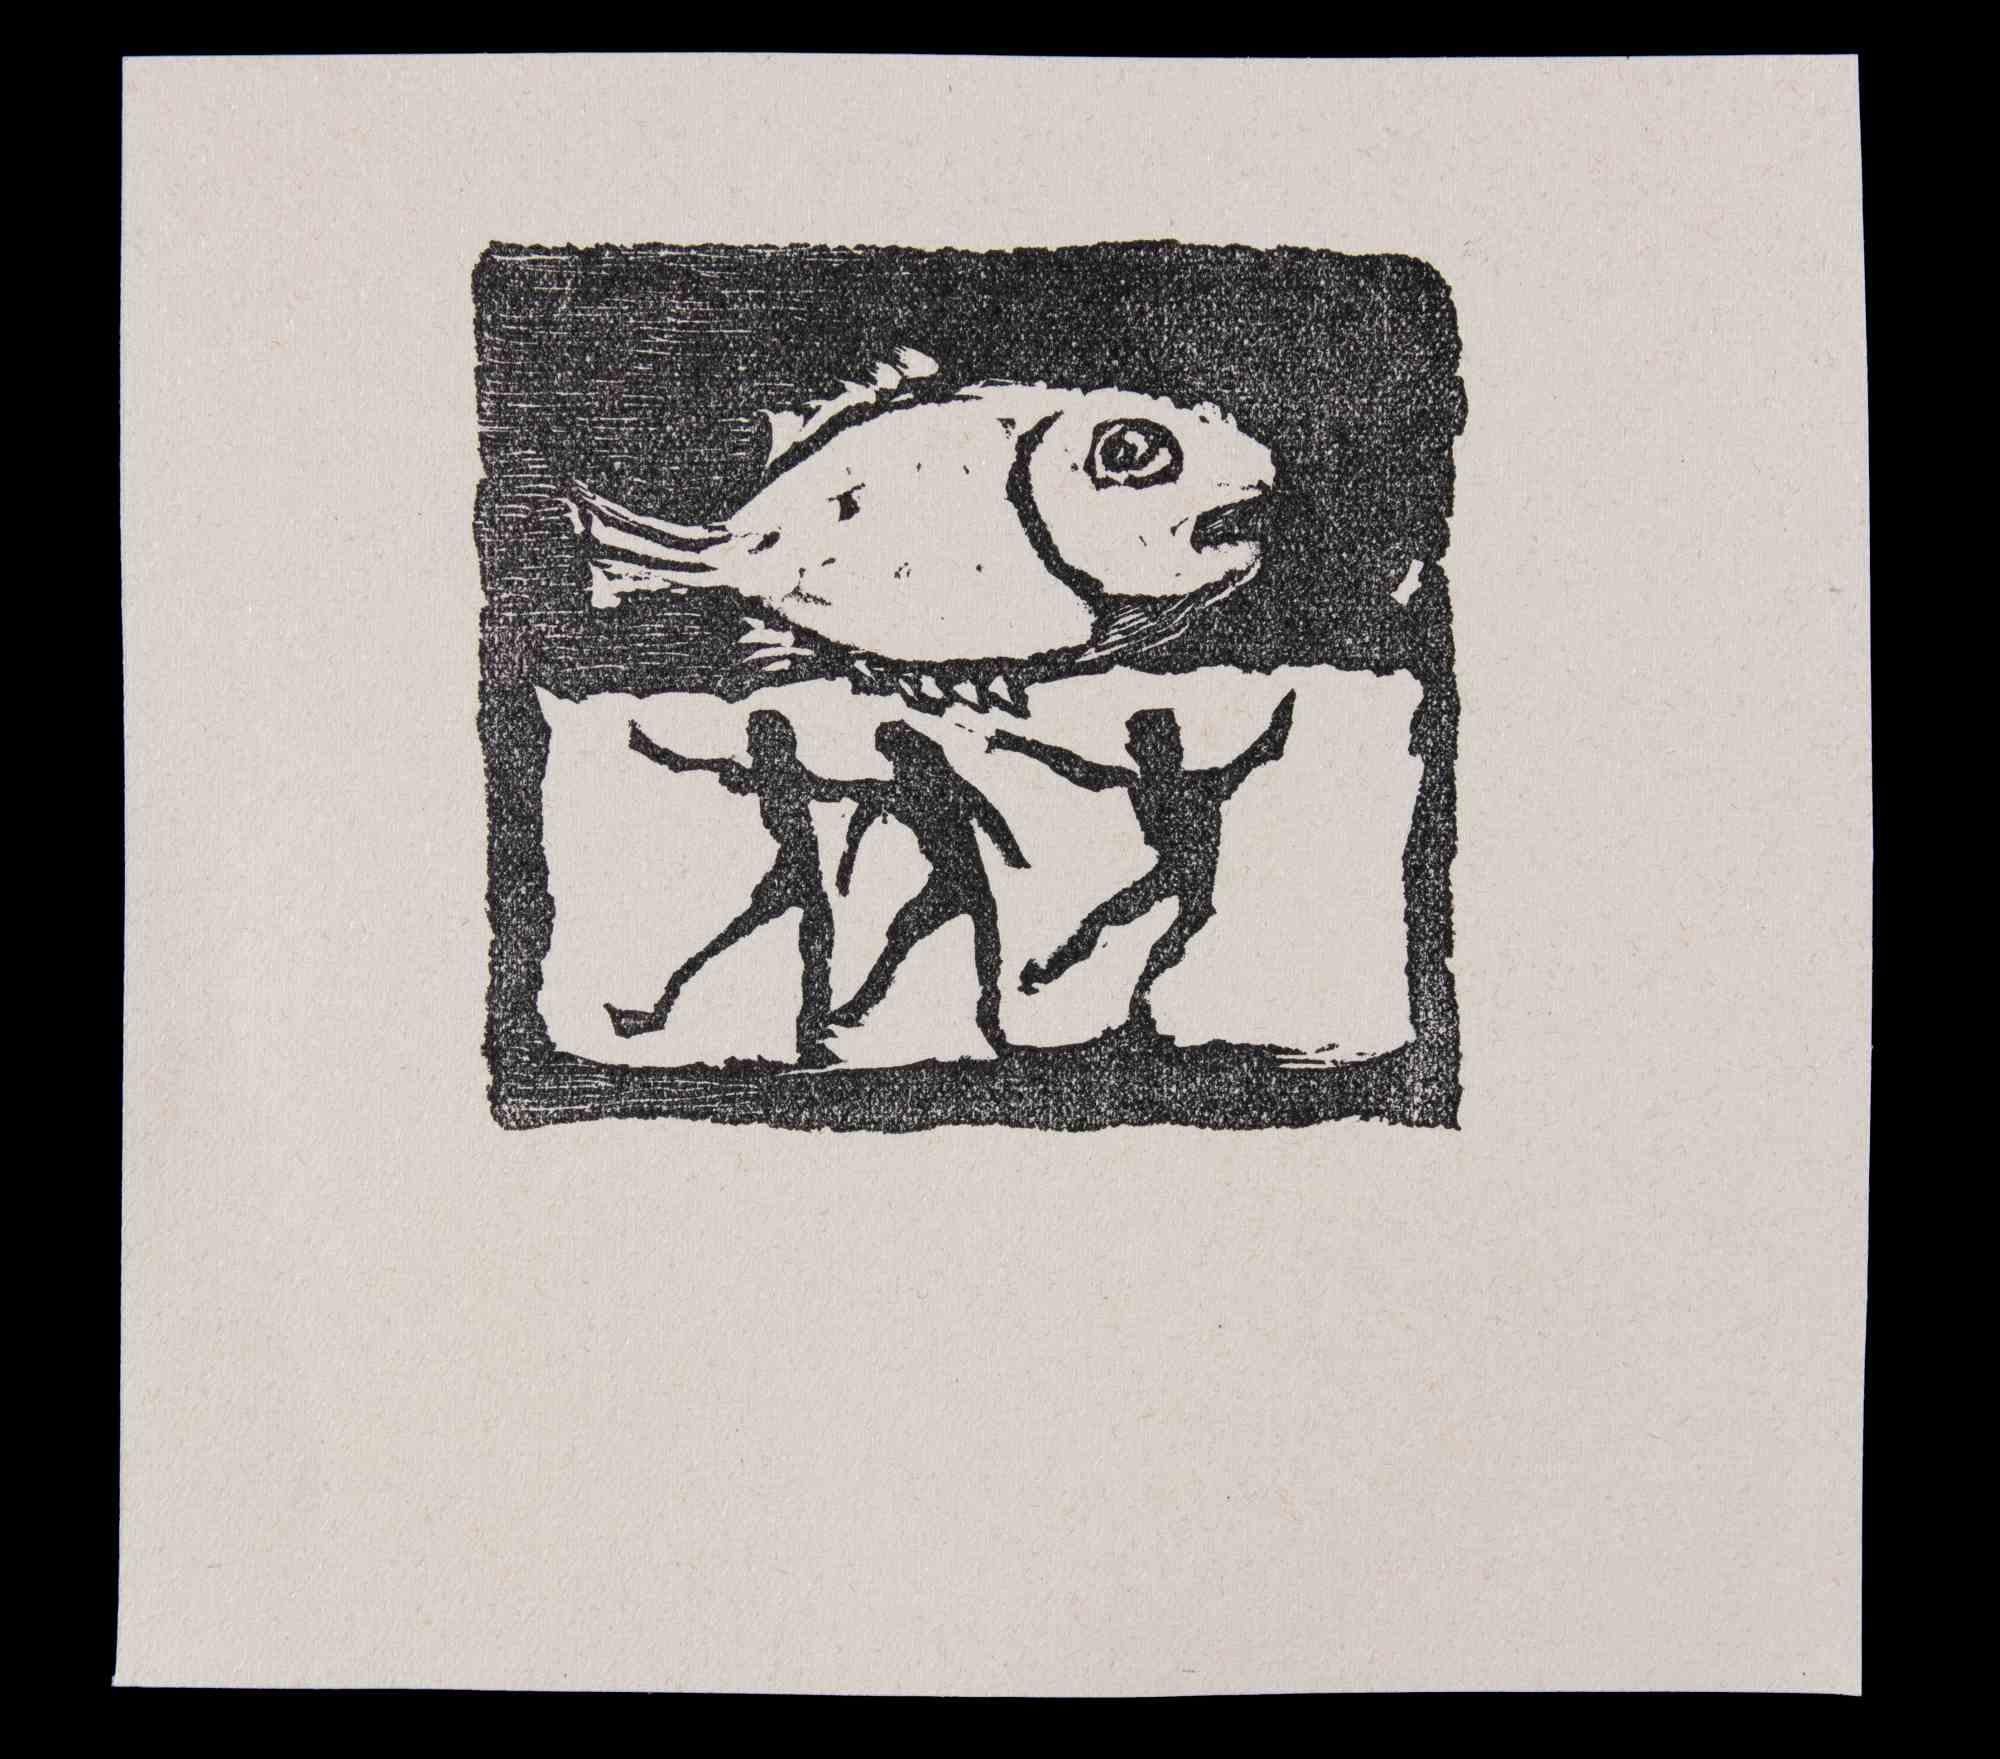 The Big Fish- Linocut by Mino Maccari - 1951